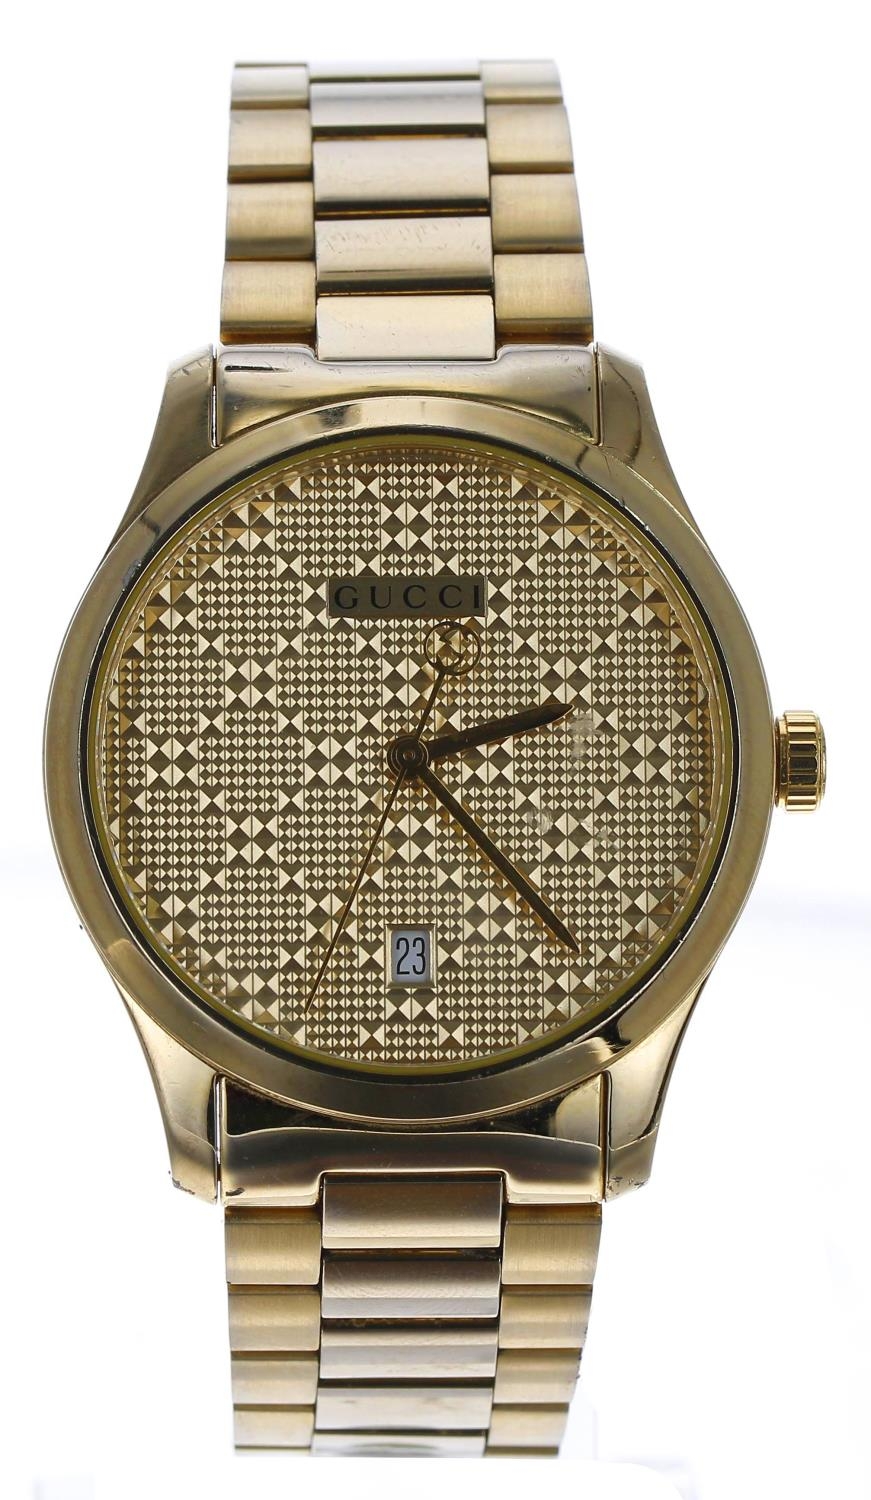 Gucci G-Timeless gold plated gentleman's wristwatch, reference no. 126.4, quartz, Gucci bracelet